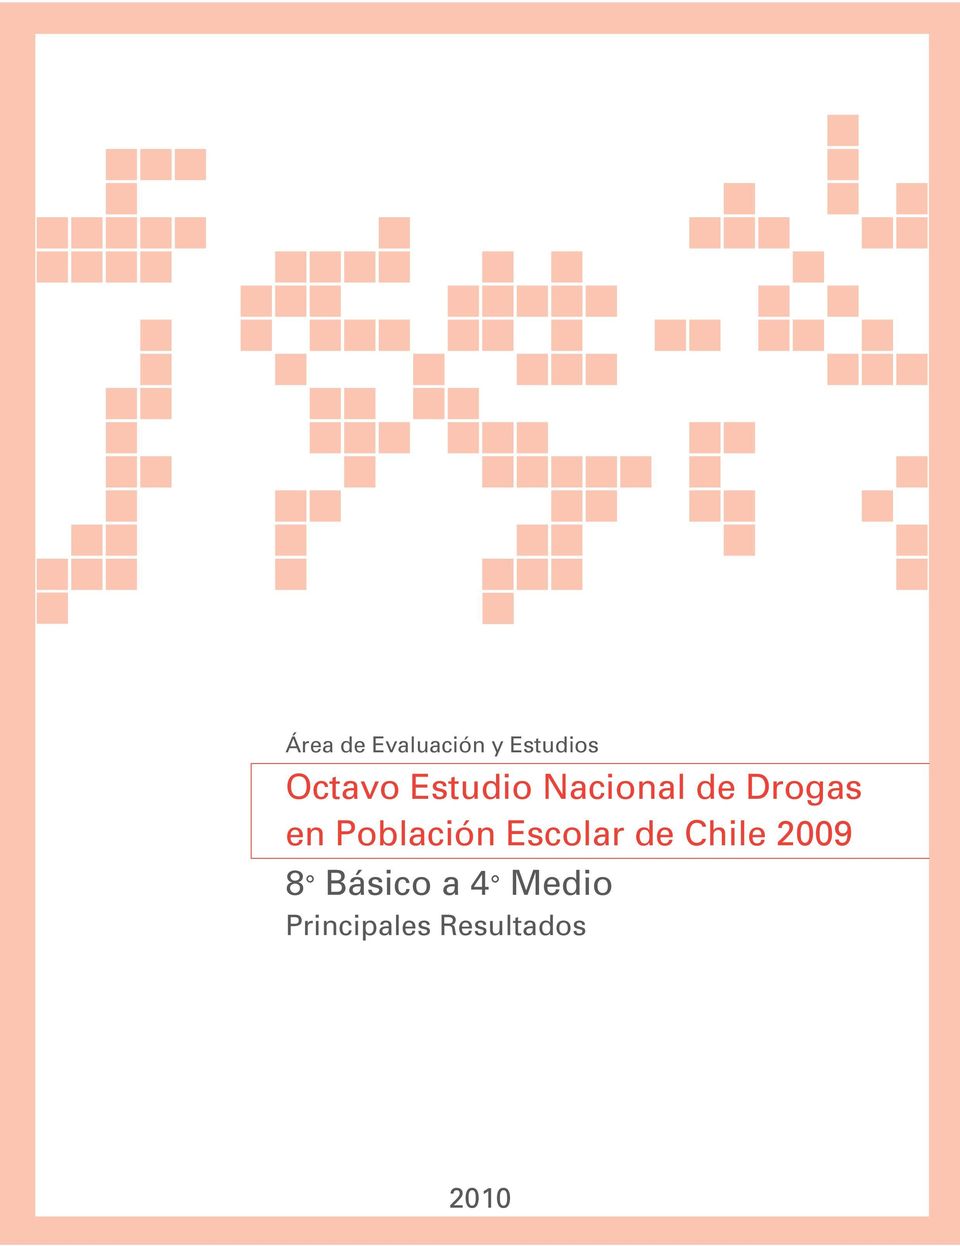 Población Escolar de Chile 2009 8